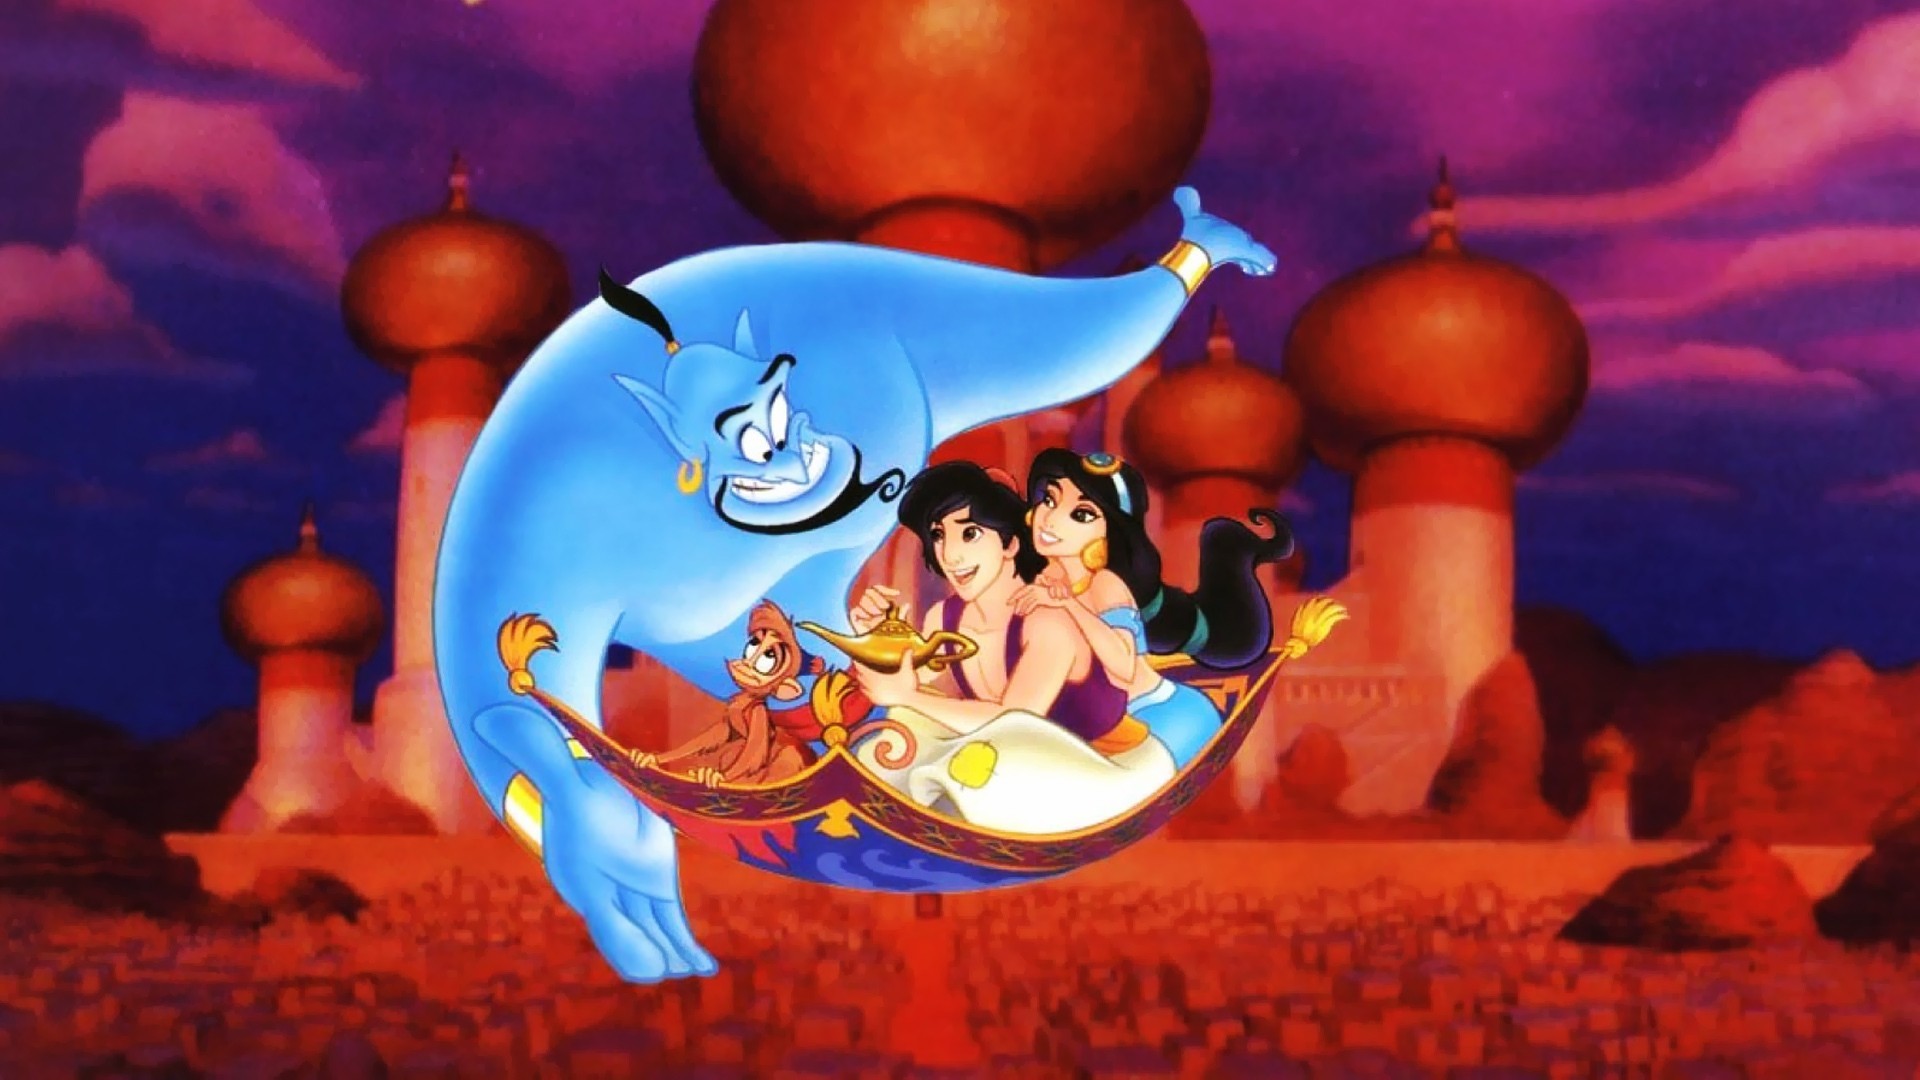 Disney Aladdin Desktop Wallpaper  Disneys World of Wonders  Disney  aladdin Aladdin 1992 Disney movies